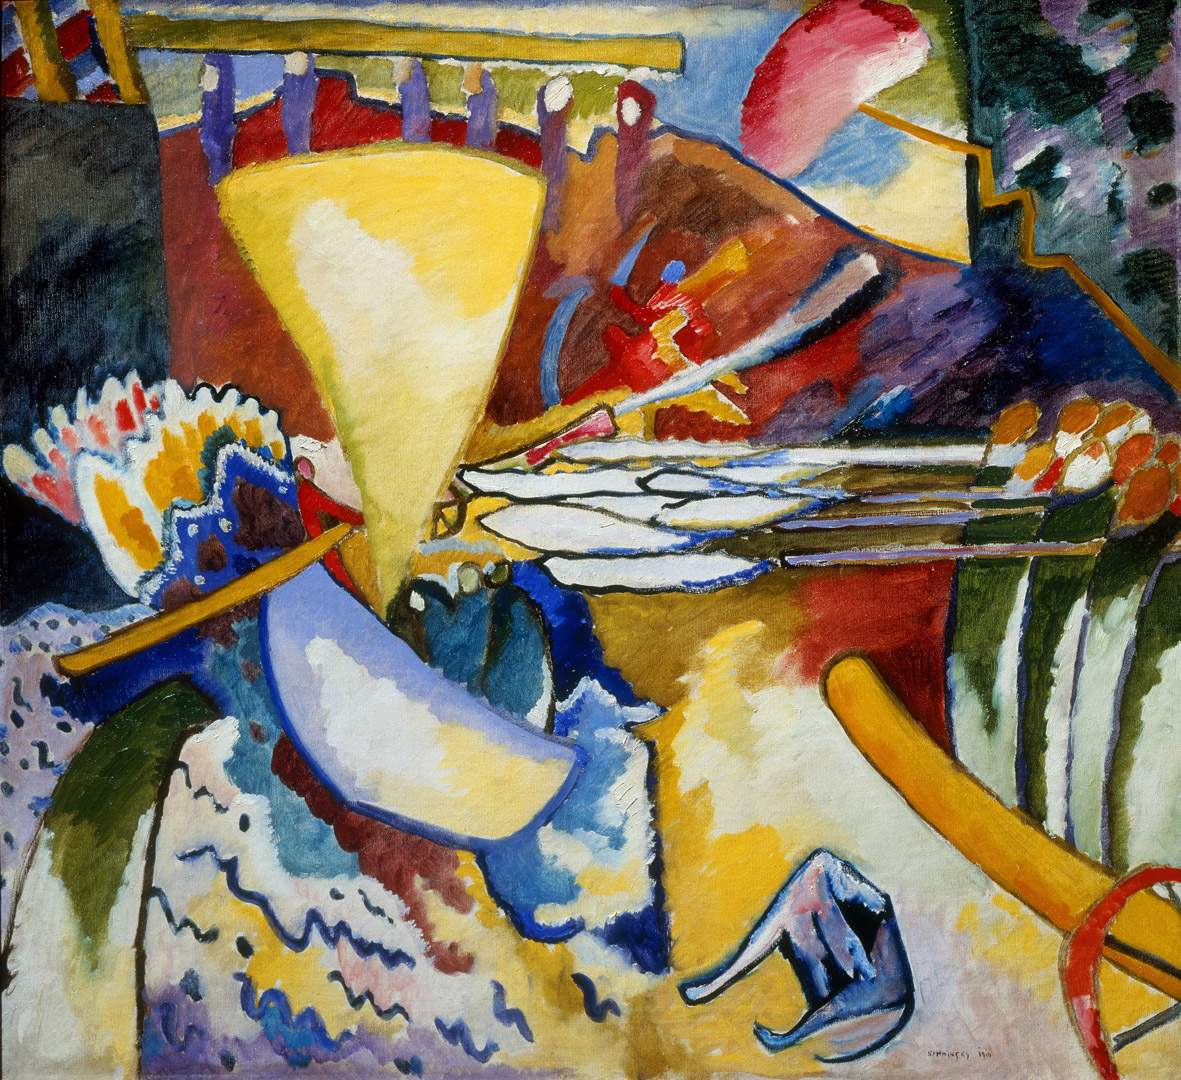 Vasily Kandinsky: a major exhibition in Rovigo traces his art 